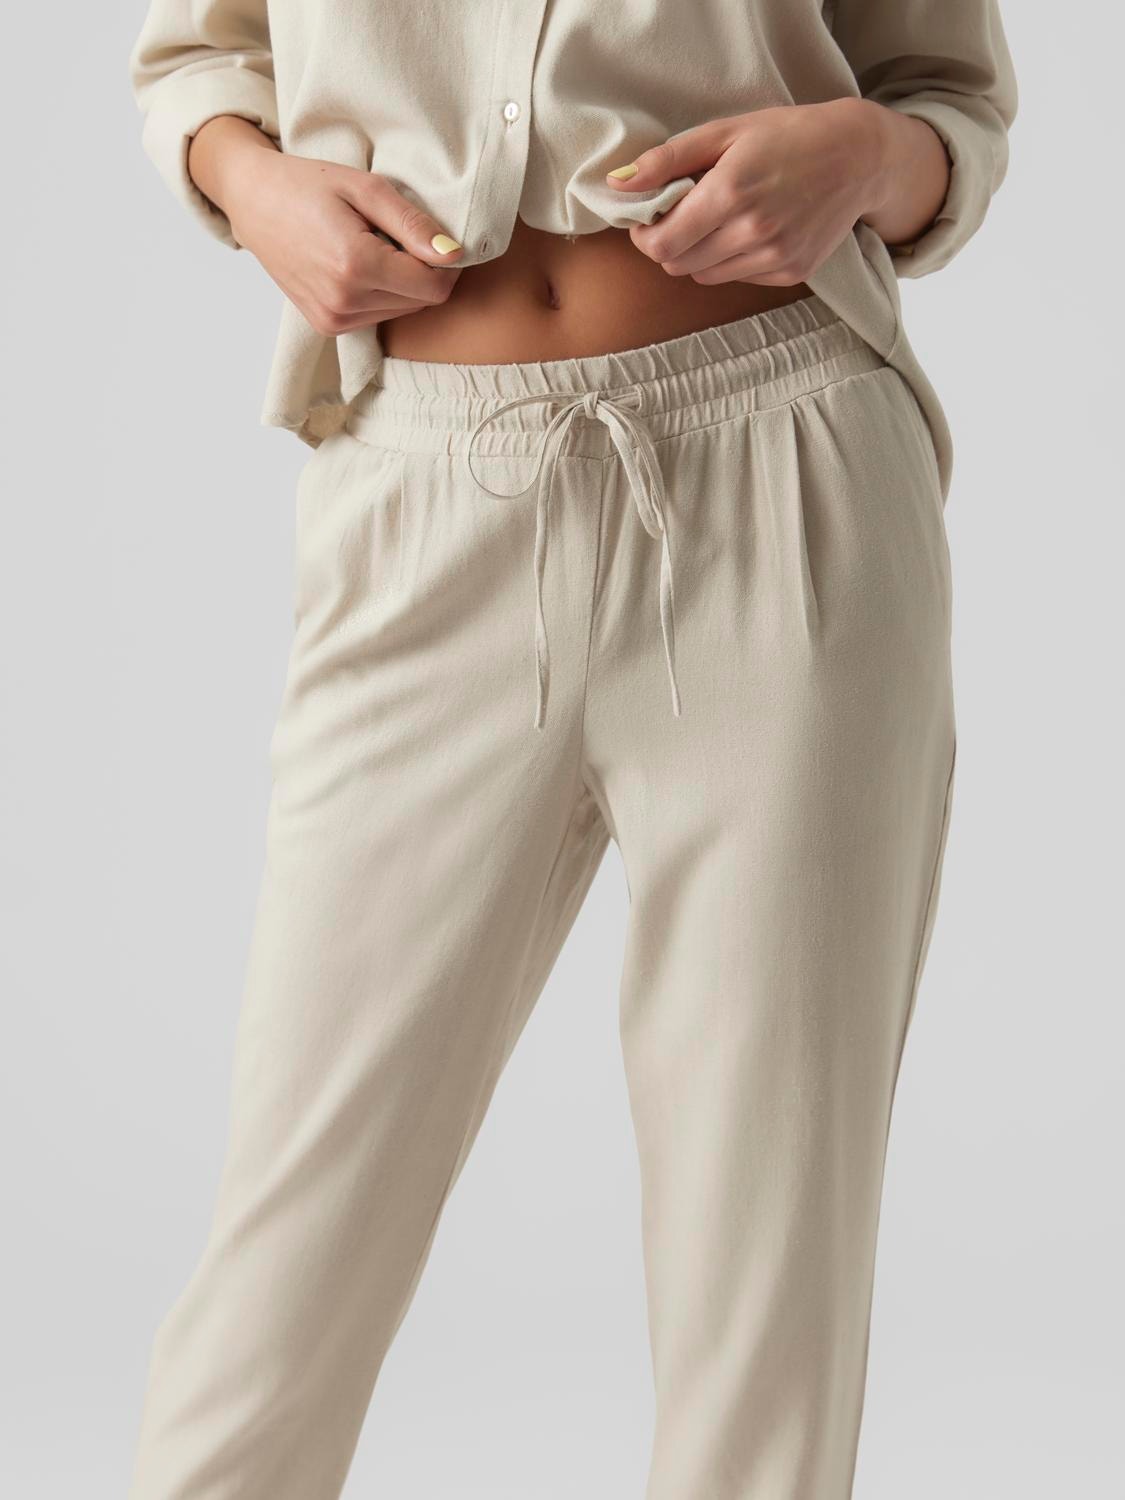 Vero Moda VMJESMILO Taille moyenne Pantalons -Silver Lining - 10279691